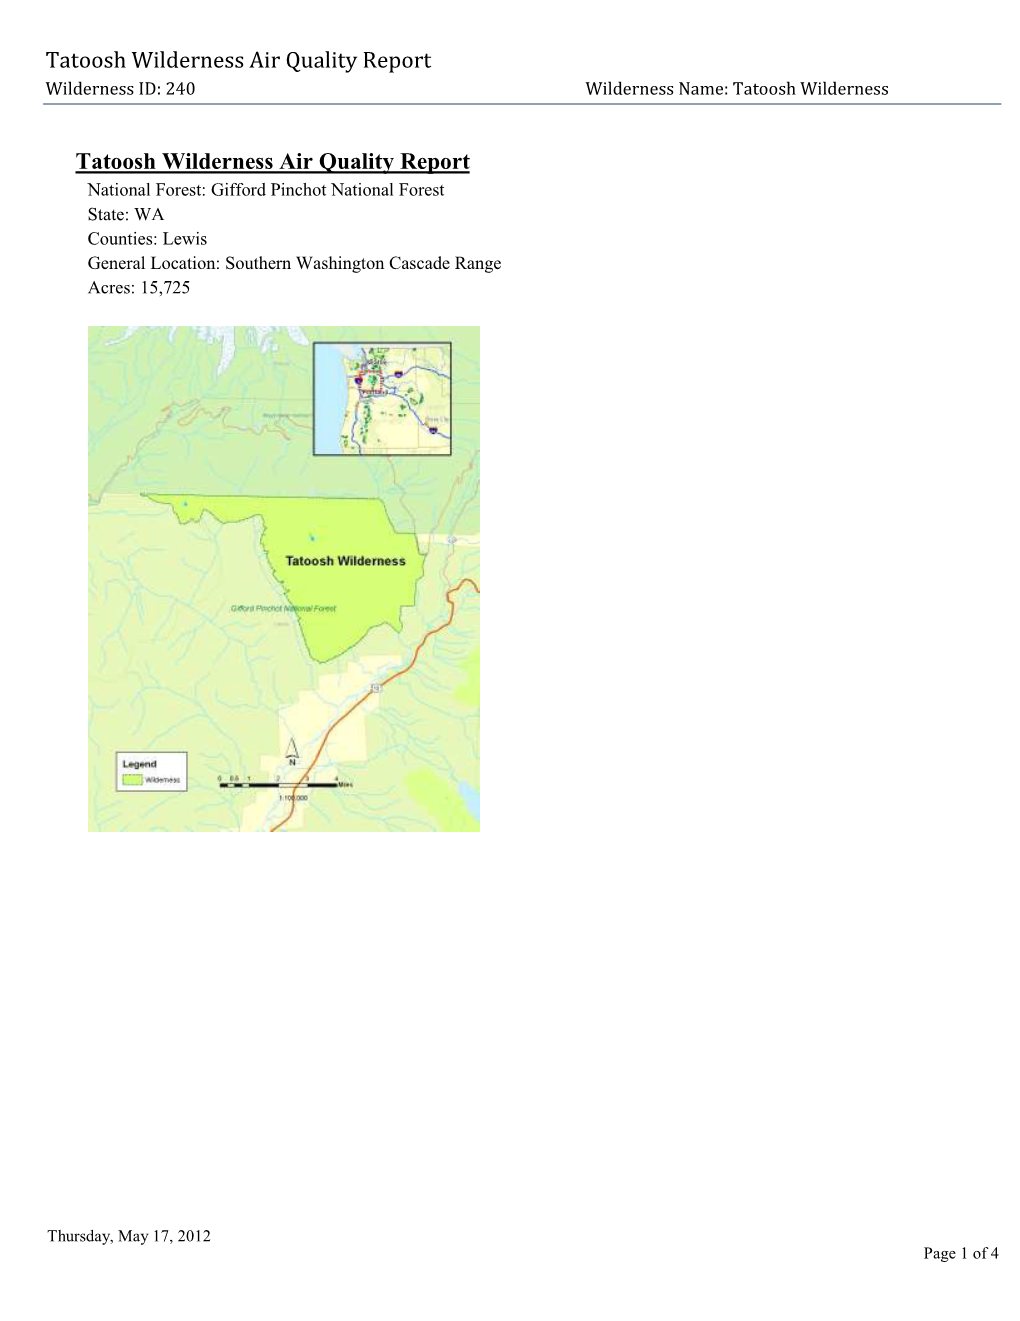 Tatoosh Wilderness Air Quality Report, 2012